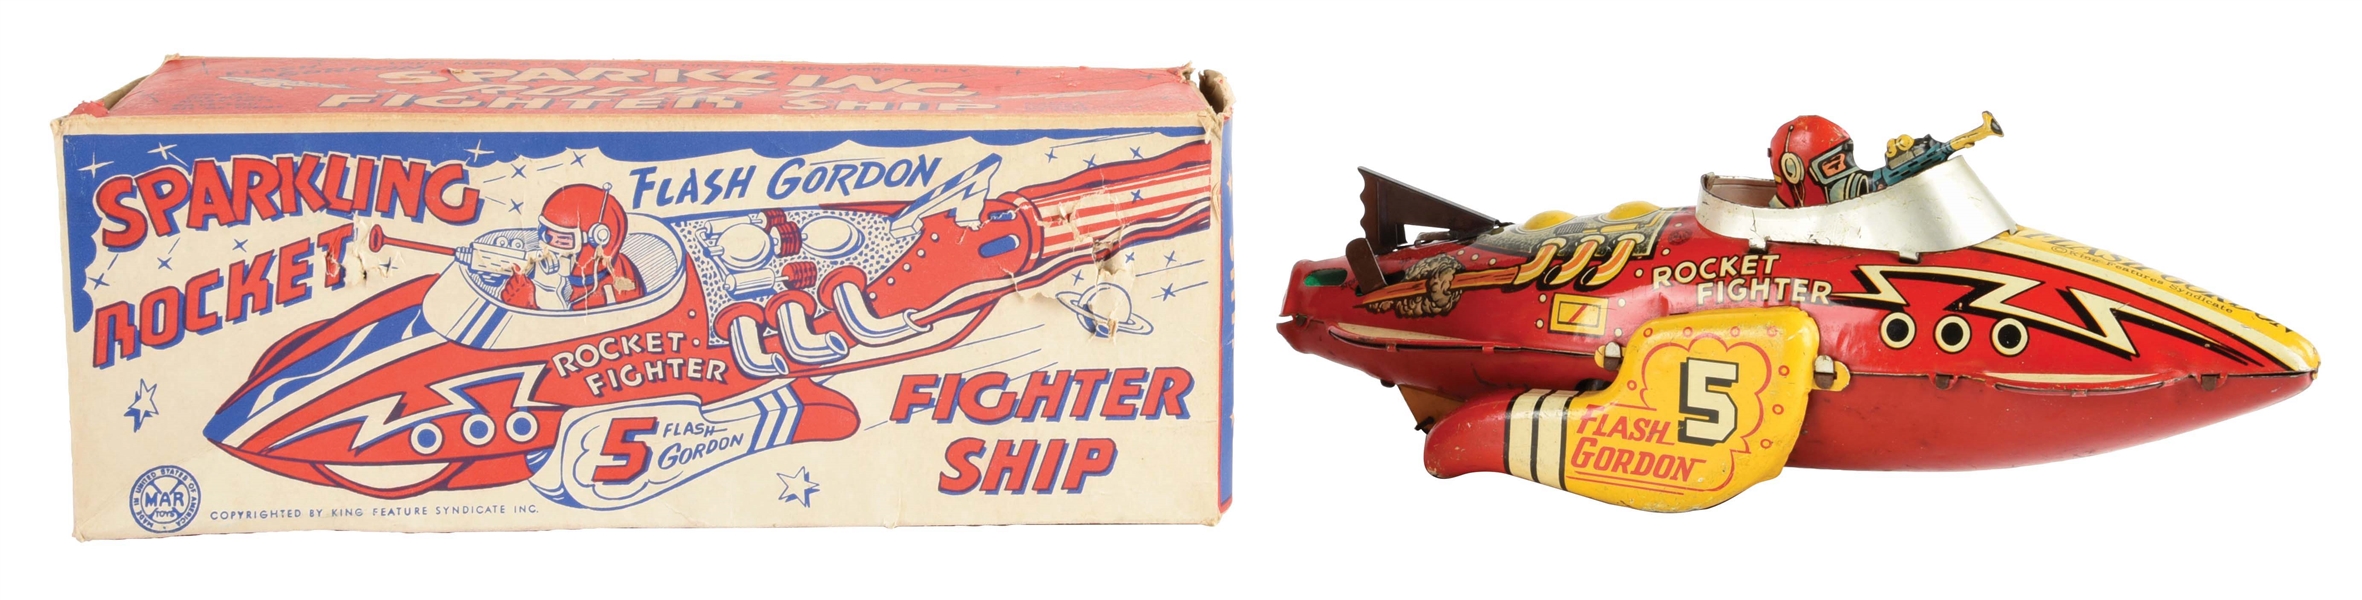 MARX TIN LITHO WIND-UP FLASH GORDON SPARKLING ROCKET FIGHTER SHIP TOY.